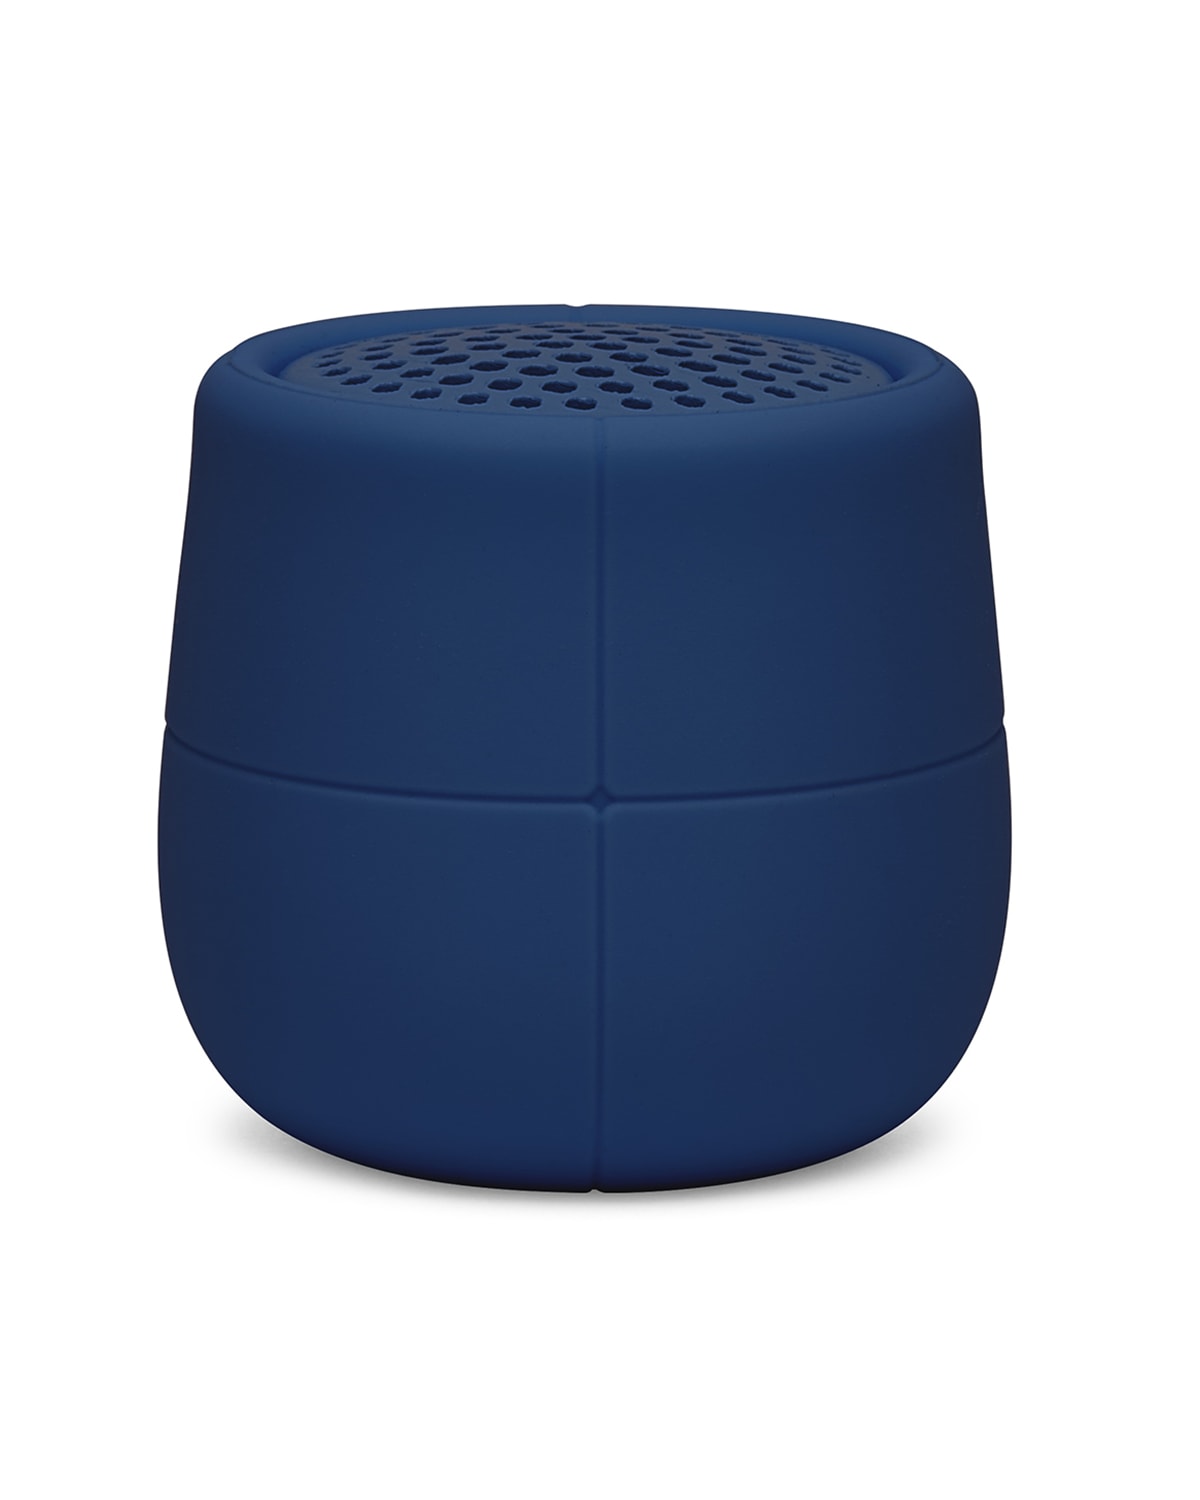 Lexon Design Mino X Water Resistant Floating Bluetooth Speaker In Dark Blue